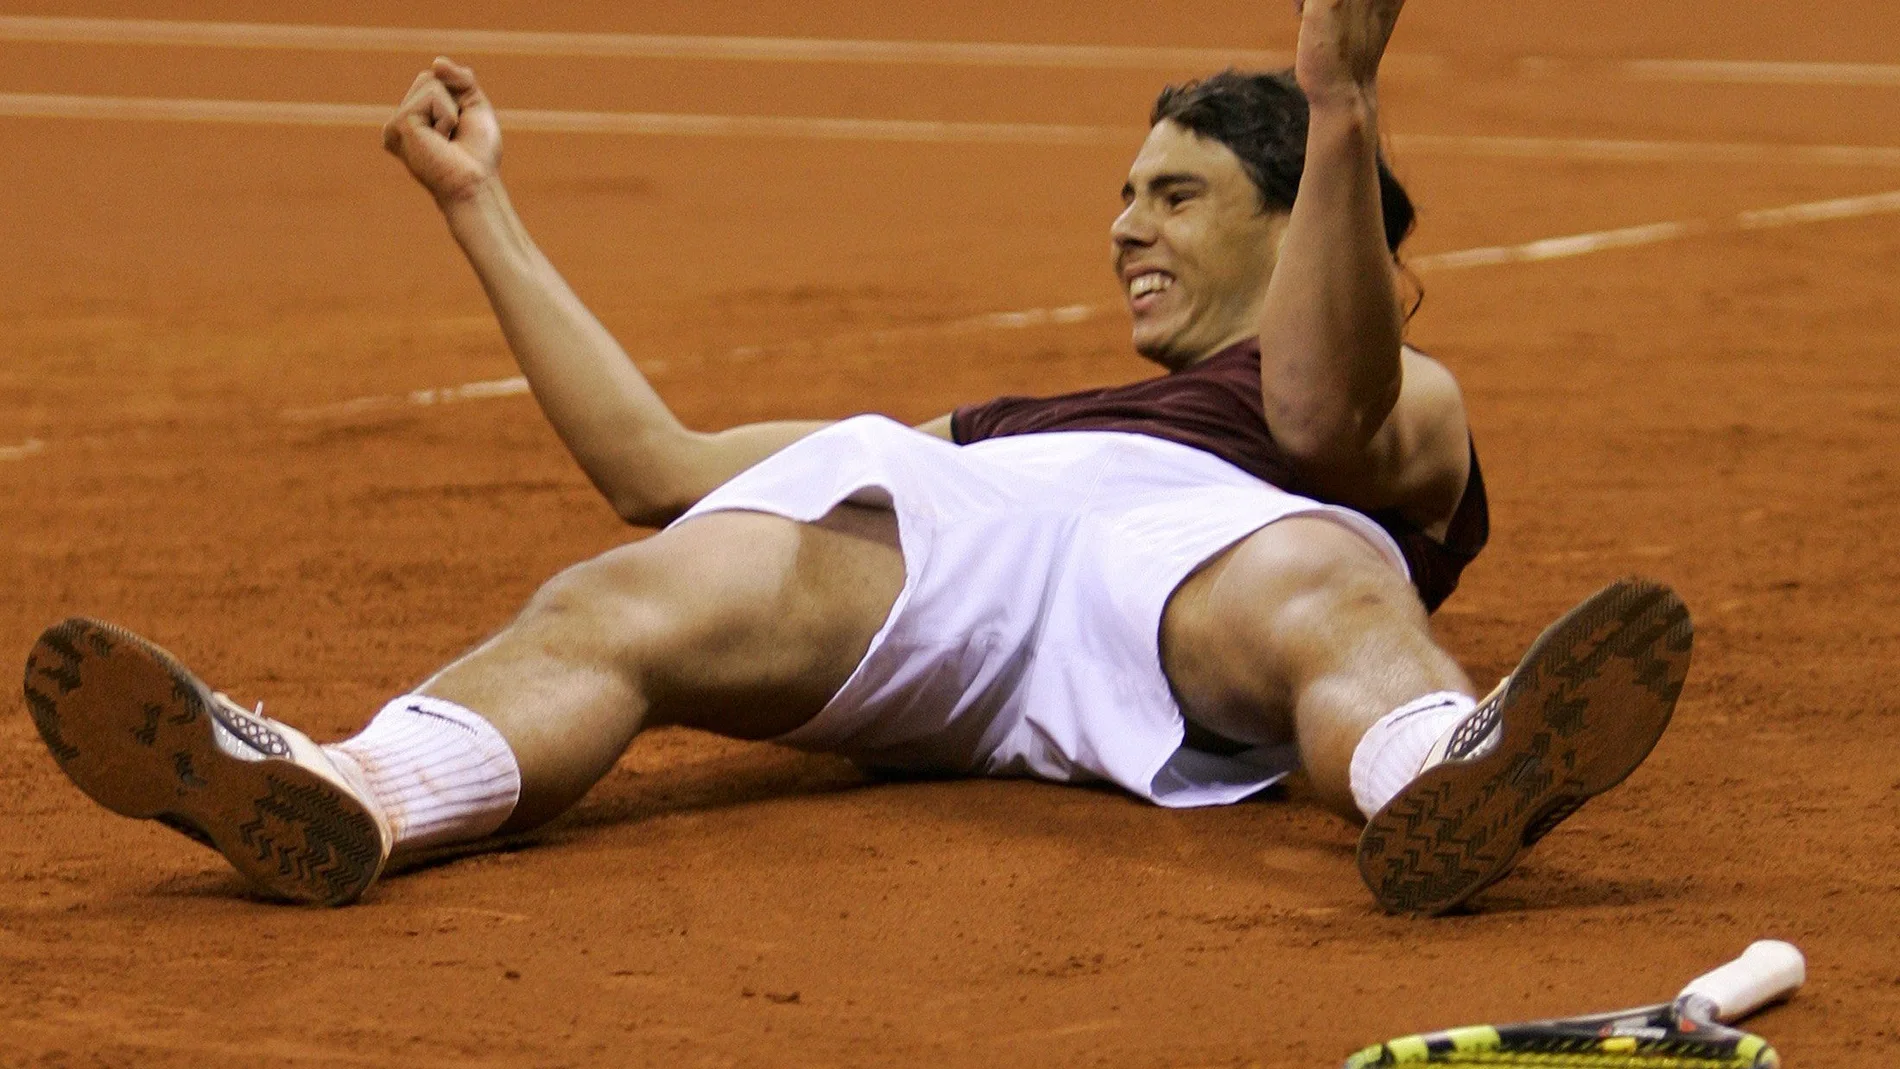 Nadal celebra su triunfo su triunfo ante Roddick en la final de la Copa Davis 2004